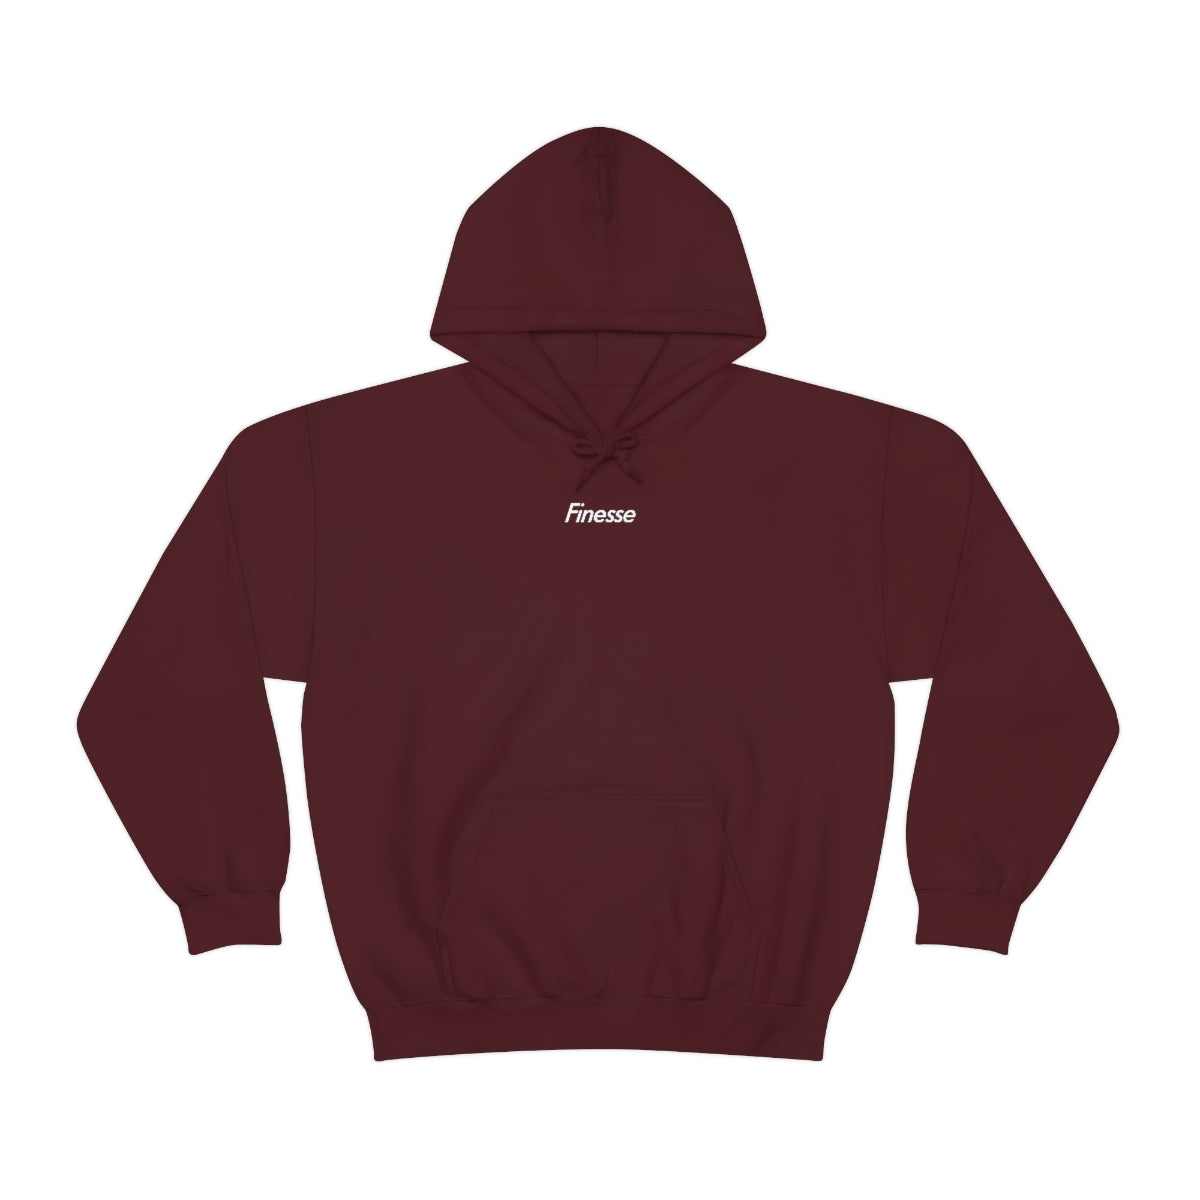 Finesse - Hooded Sweatshirt | Hoodie | PARADIS SVP